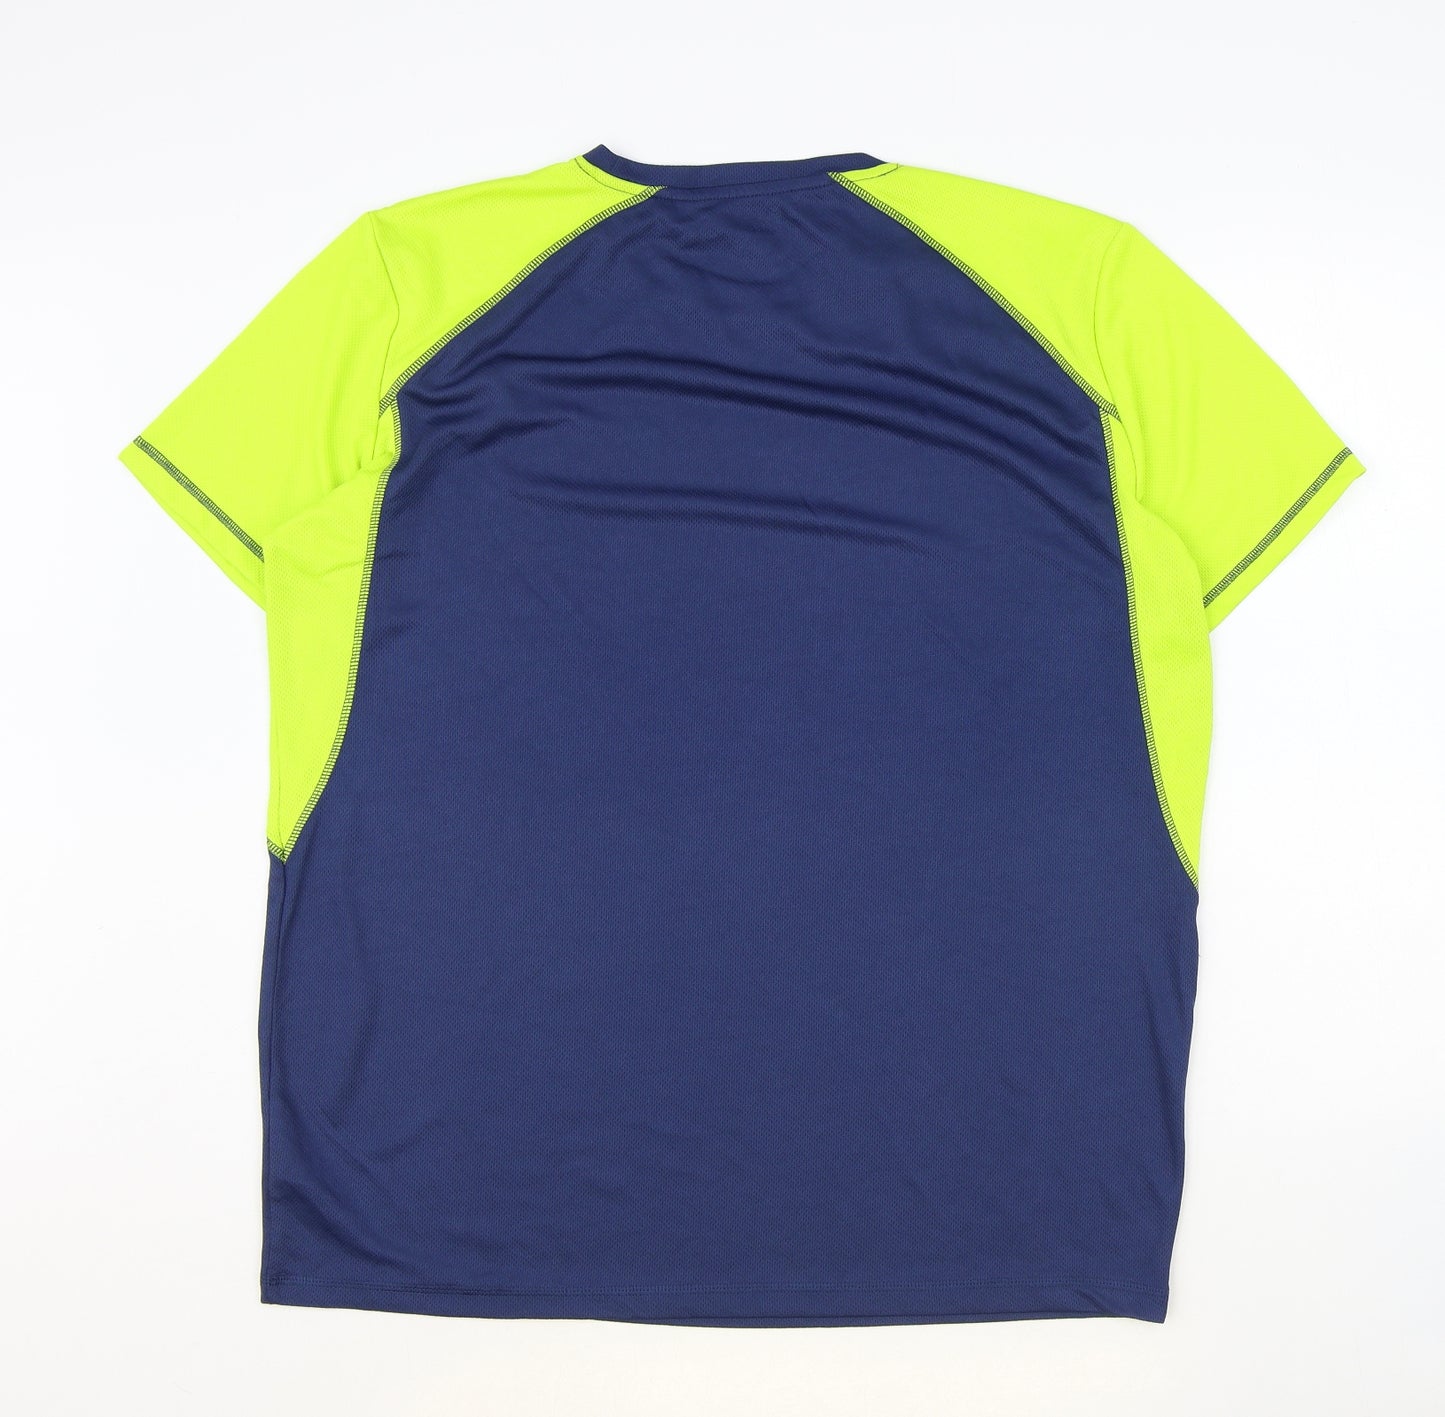 Crivit Mens Blue Colourblock Polyester T-Shirt Size 2XL Round Neck